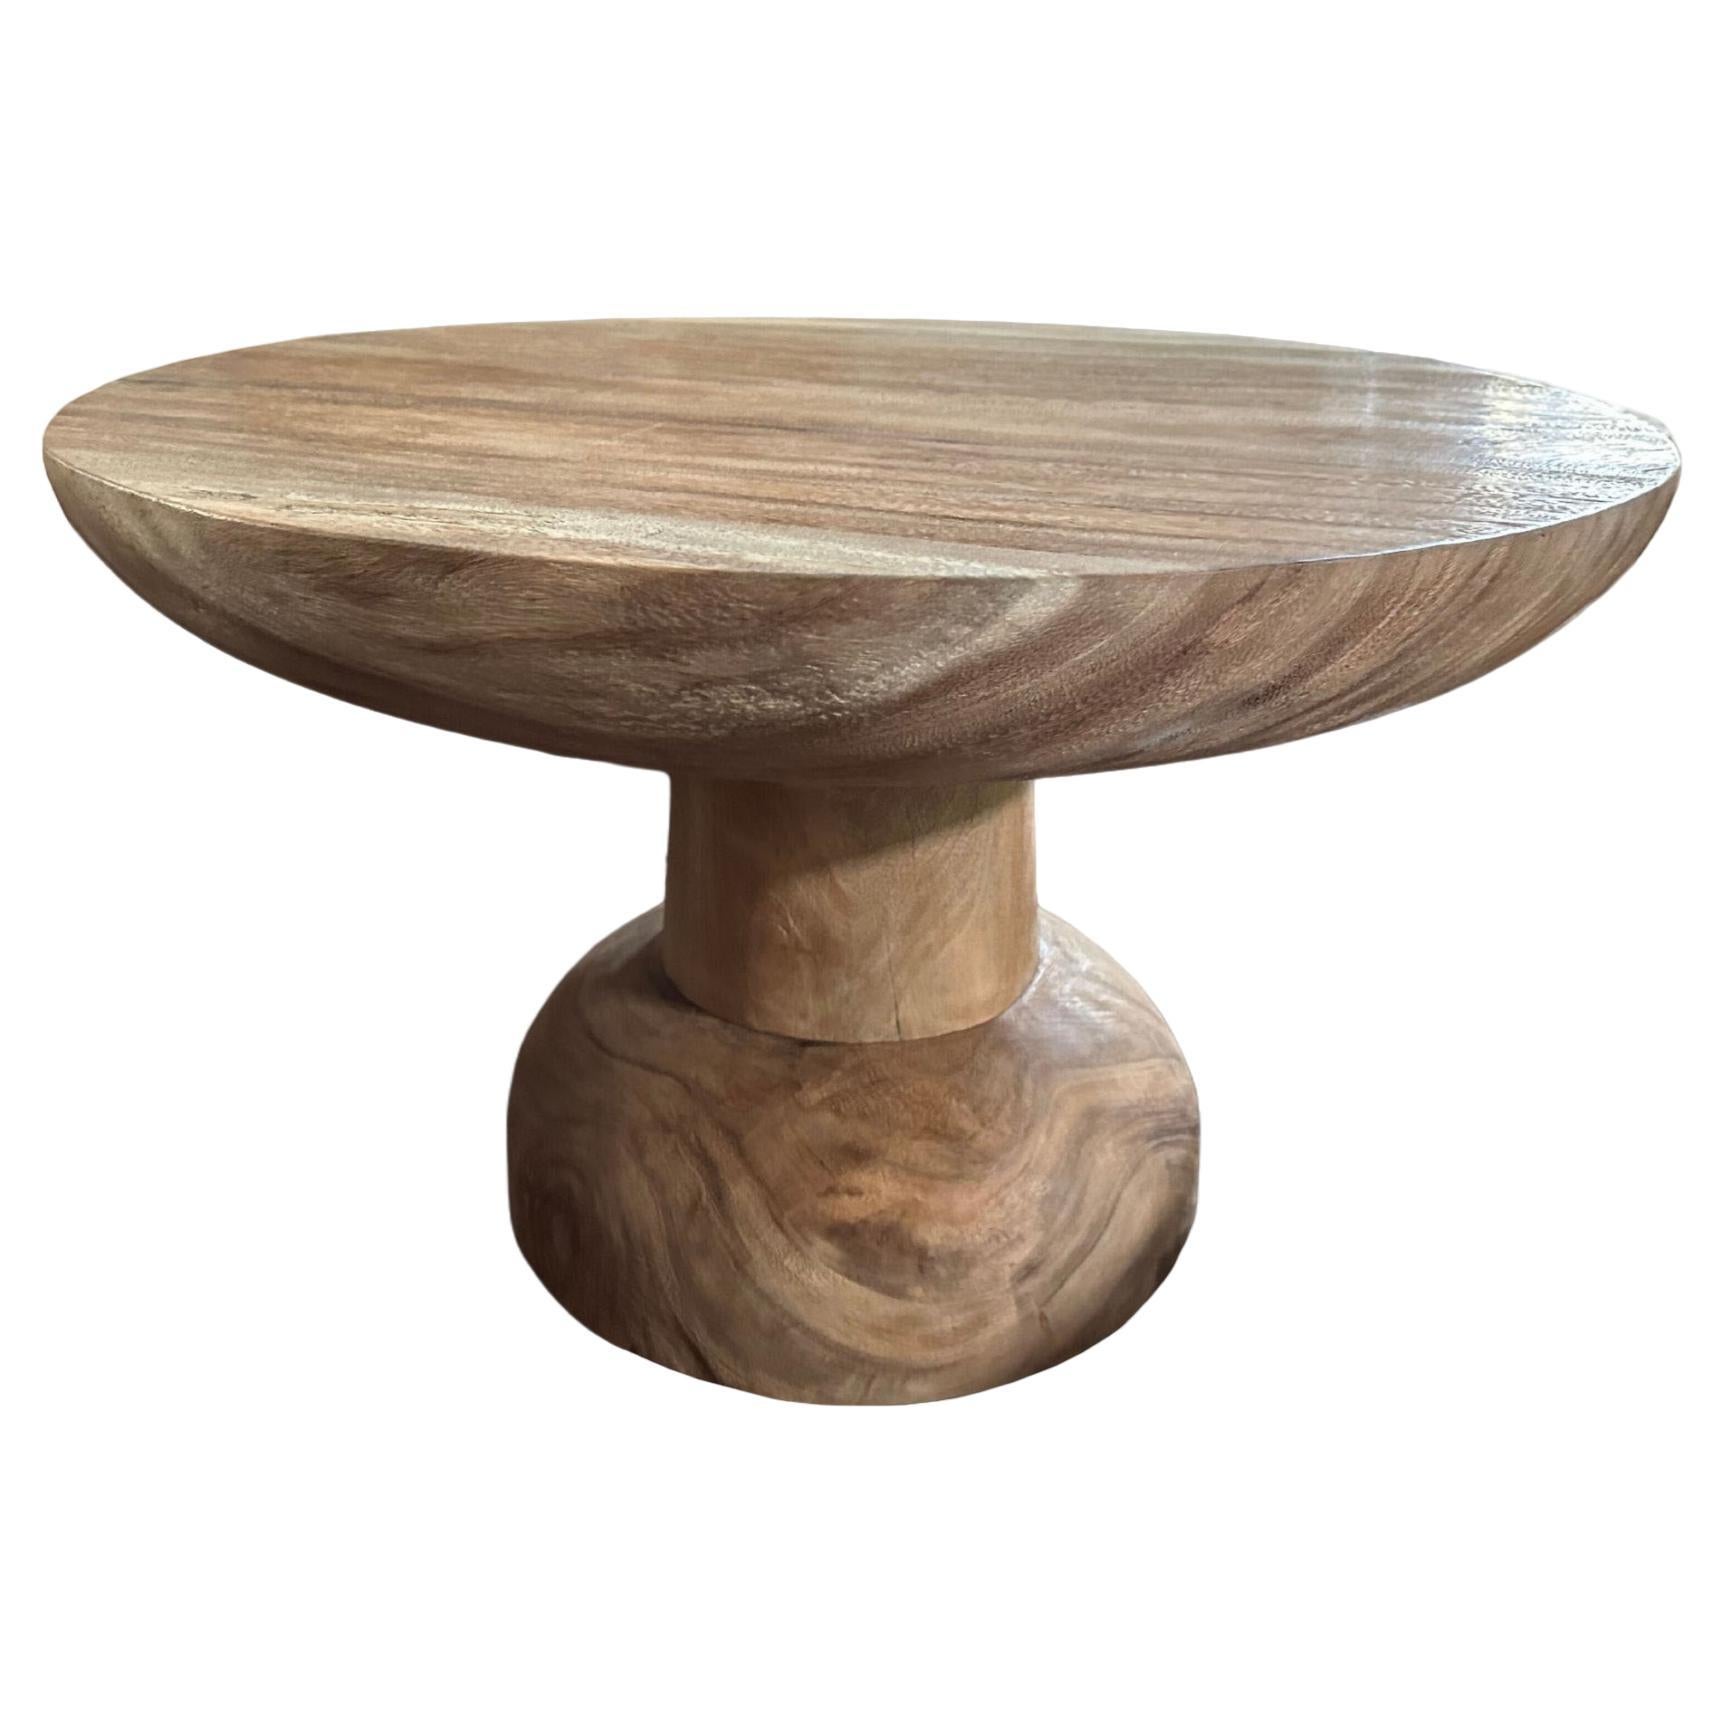 Sculptural Round Table Suar Wood, Modern Organic